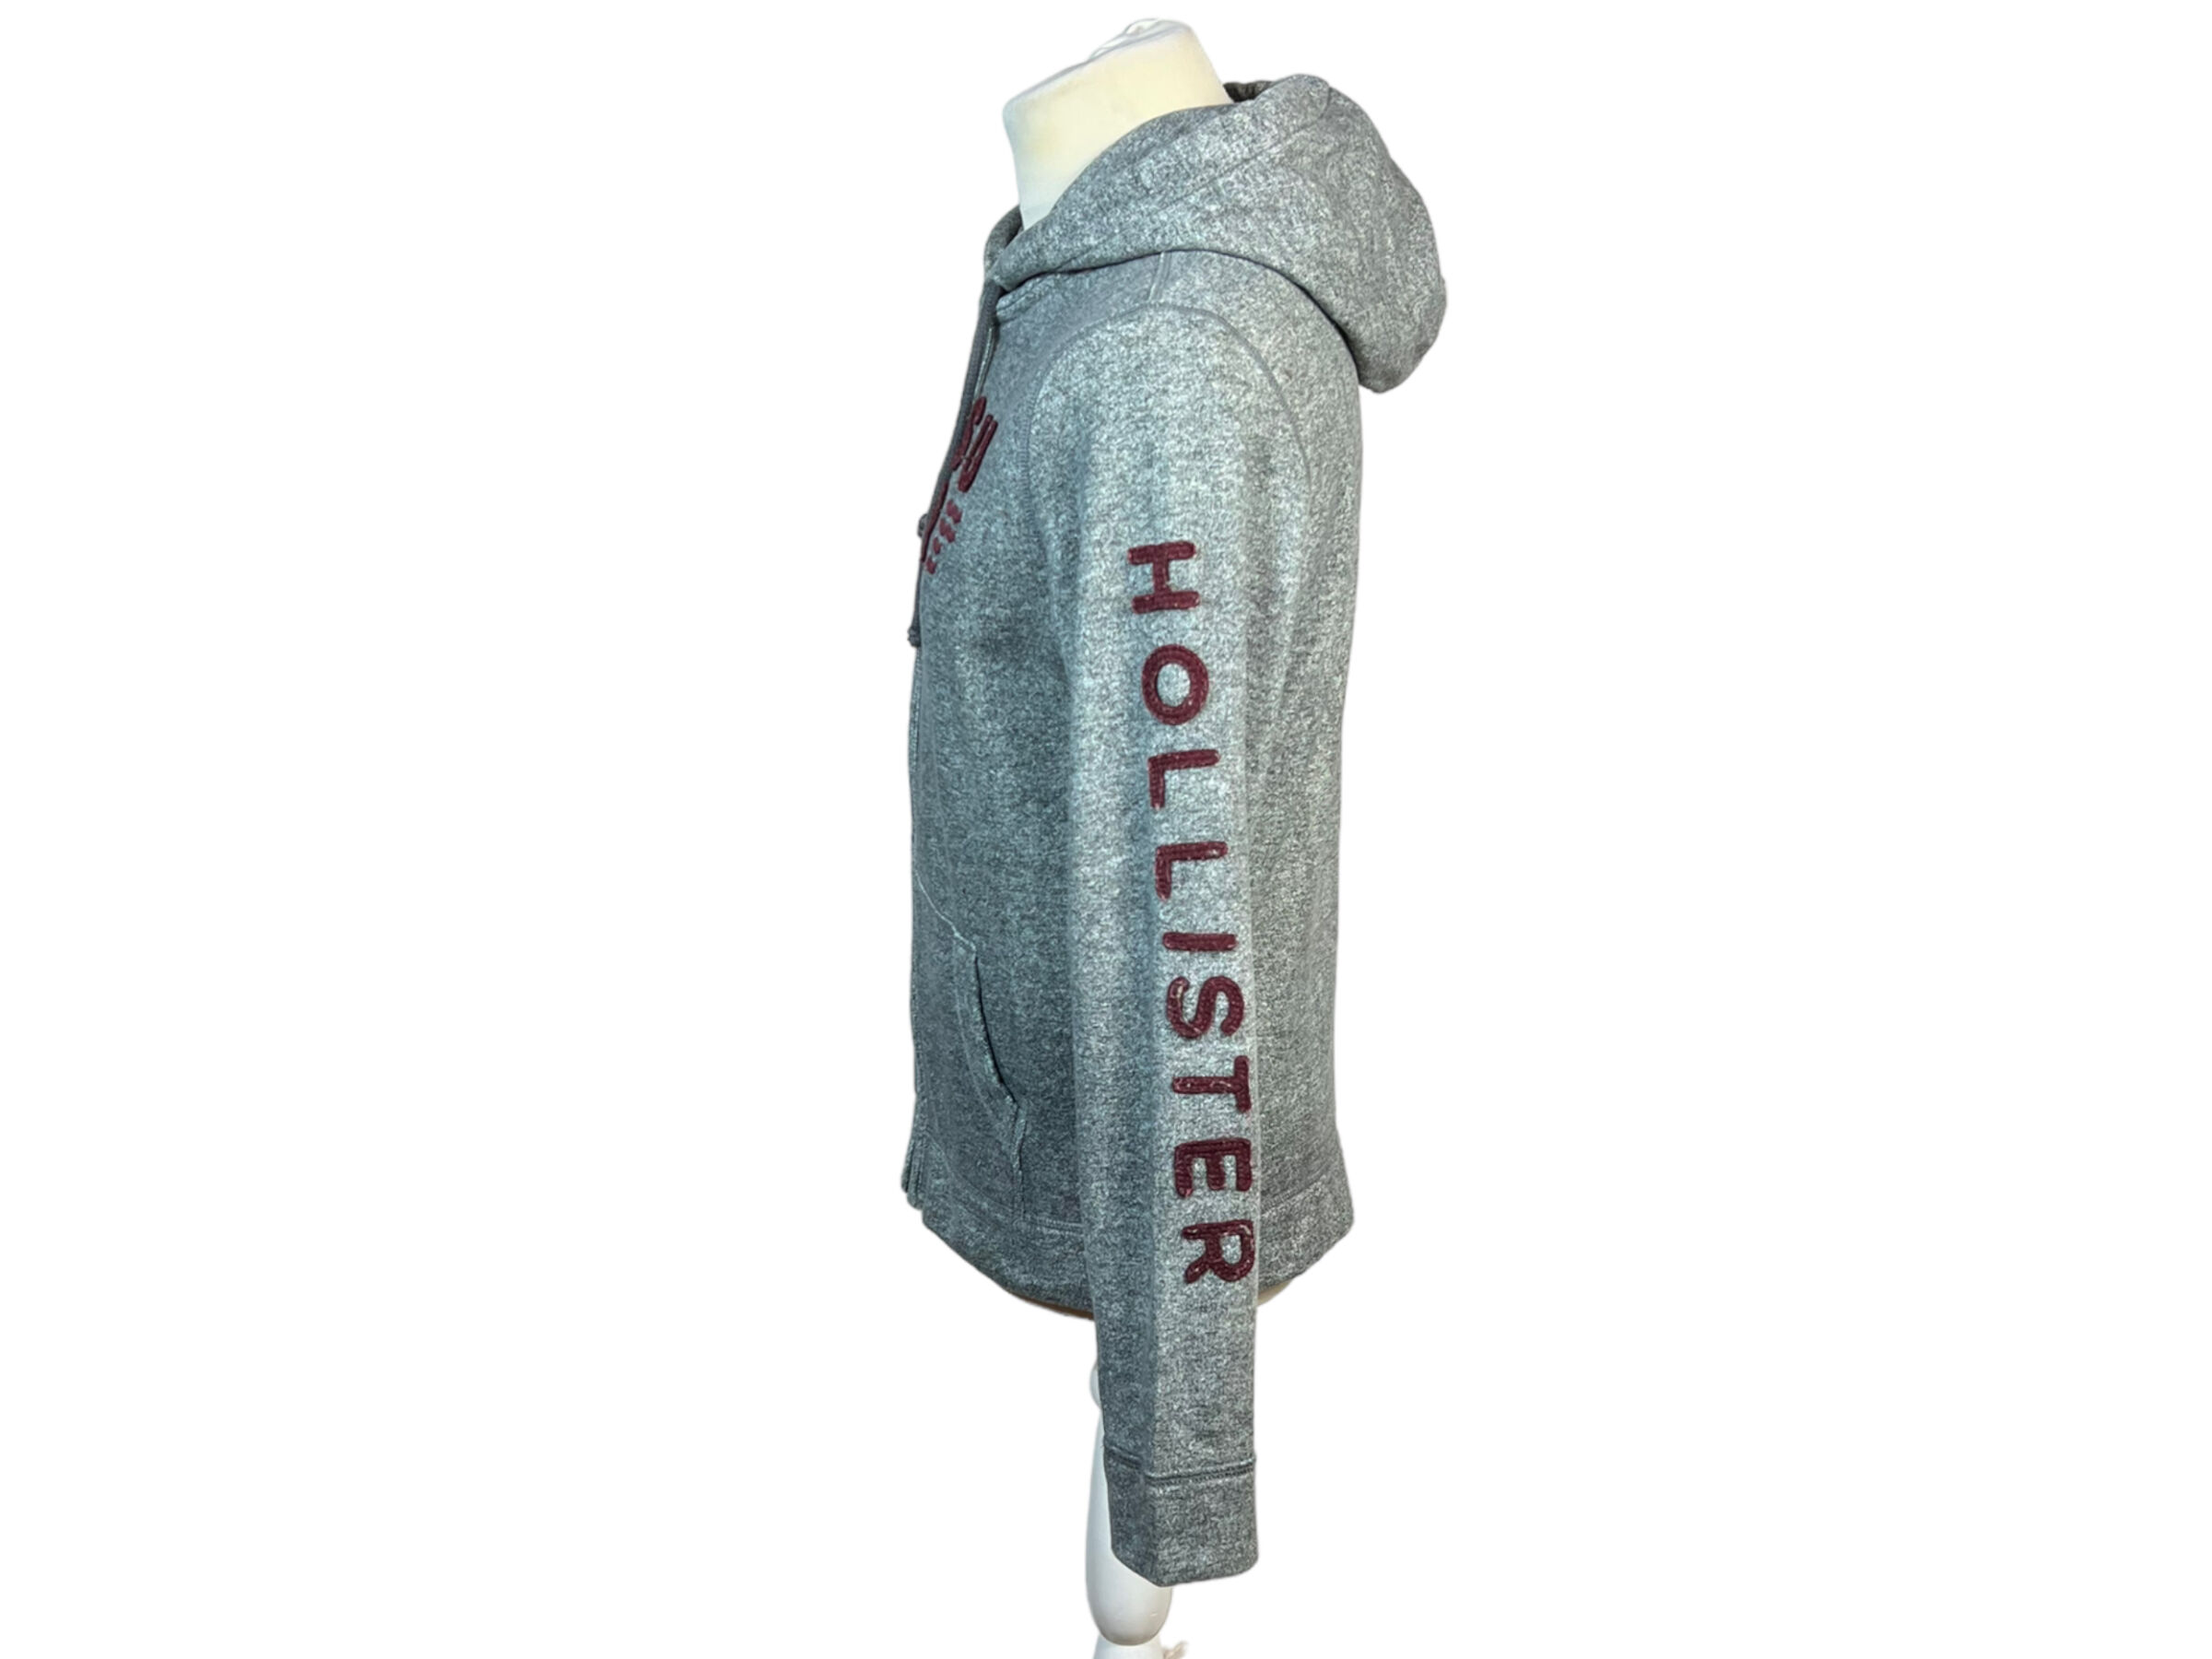 Hollister pulóver (S)